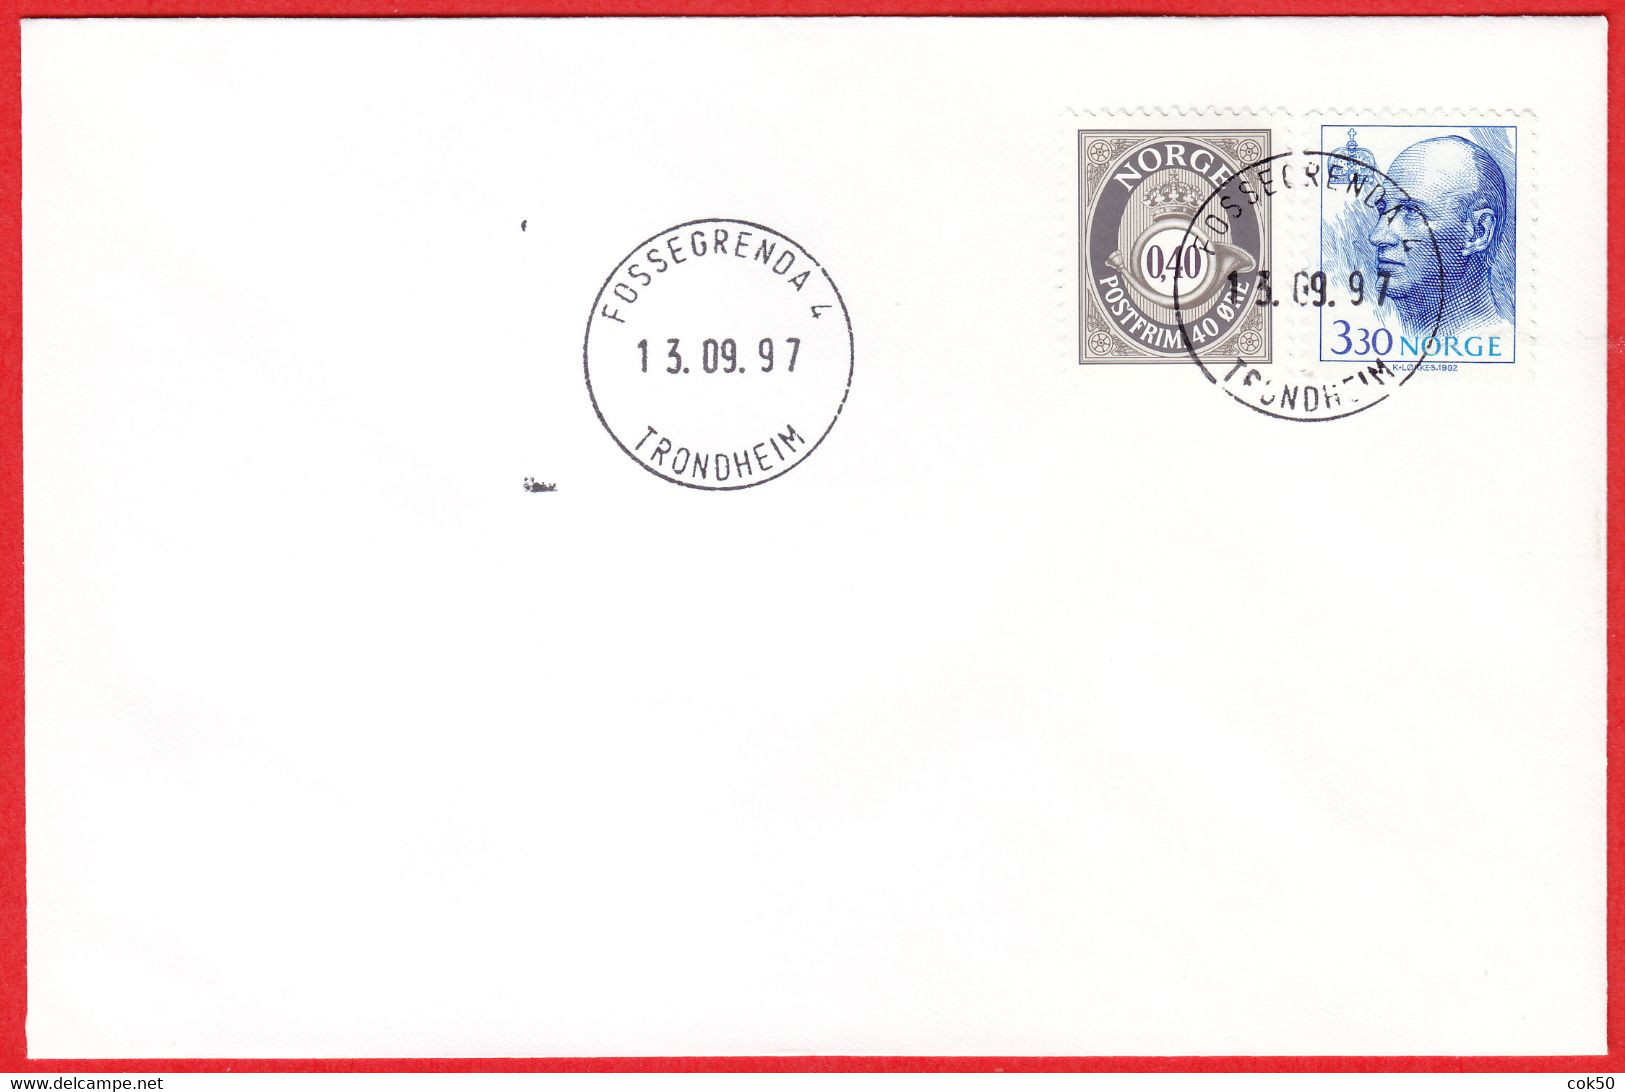 NORWAY -  FOSSEGRENDA 4 - TRONDHEIM (Trøndelag County) - Last Day/postoffice Closed On 1997.09.13 - Local Post Stamps